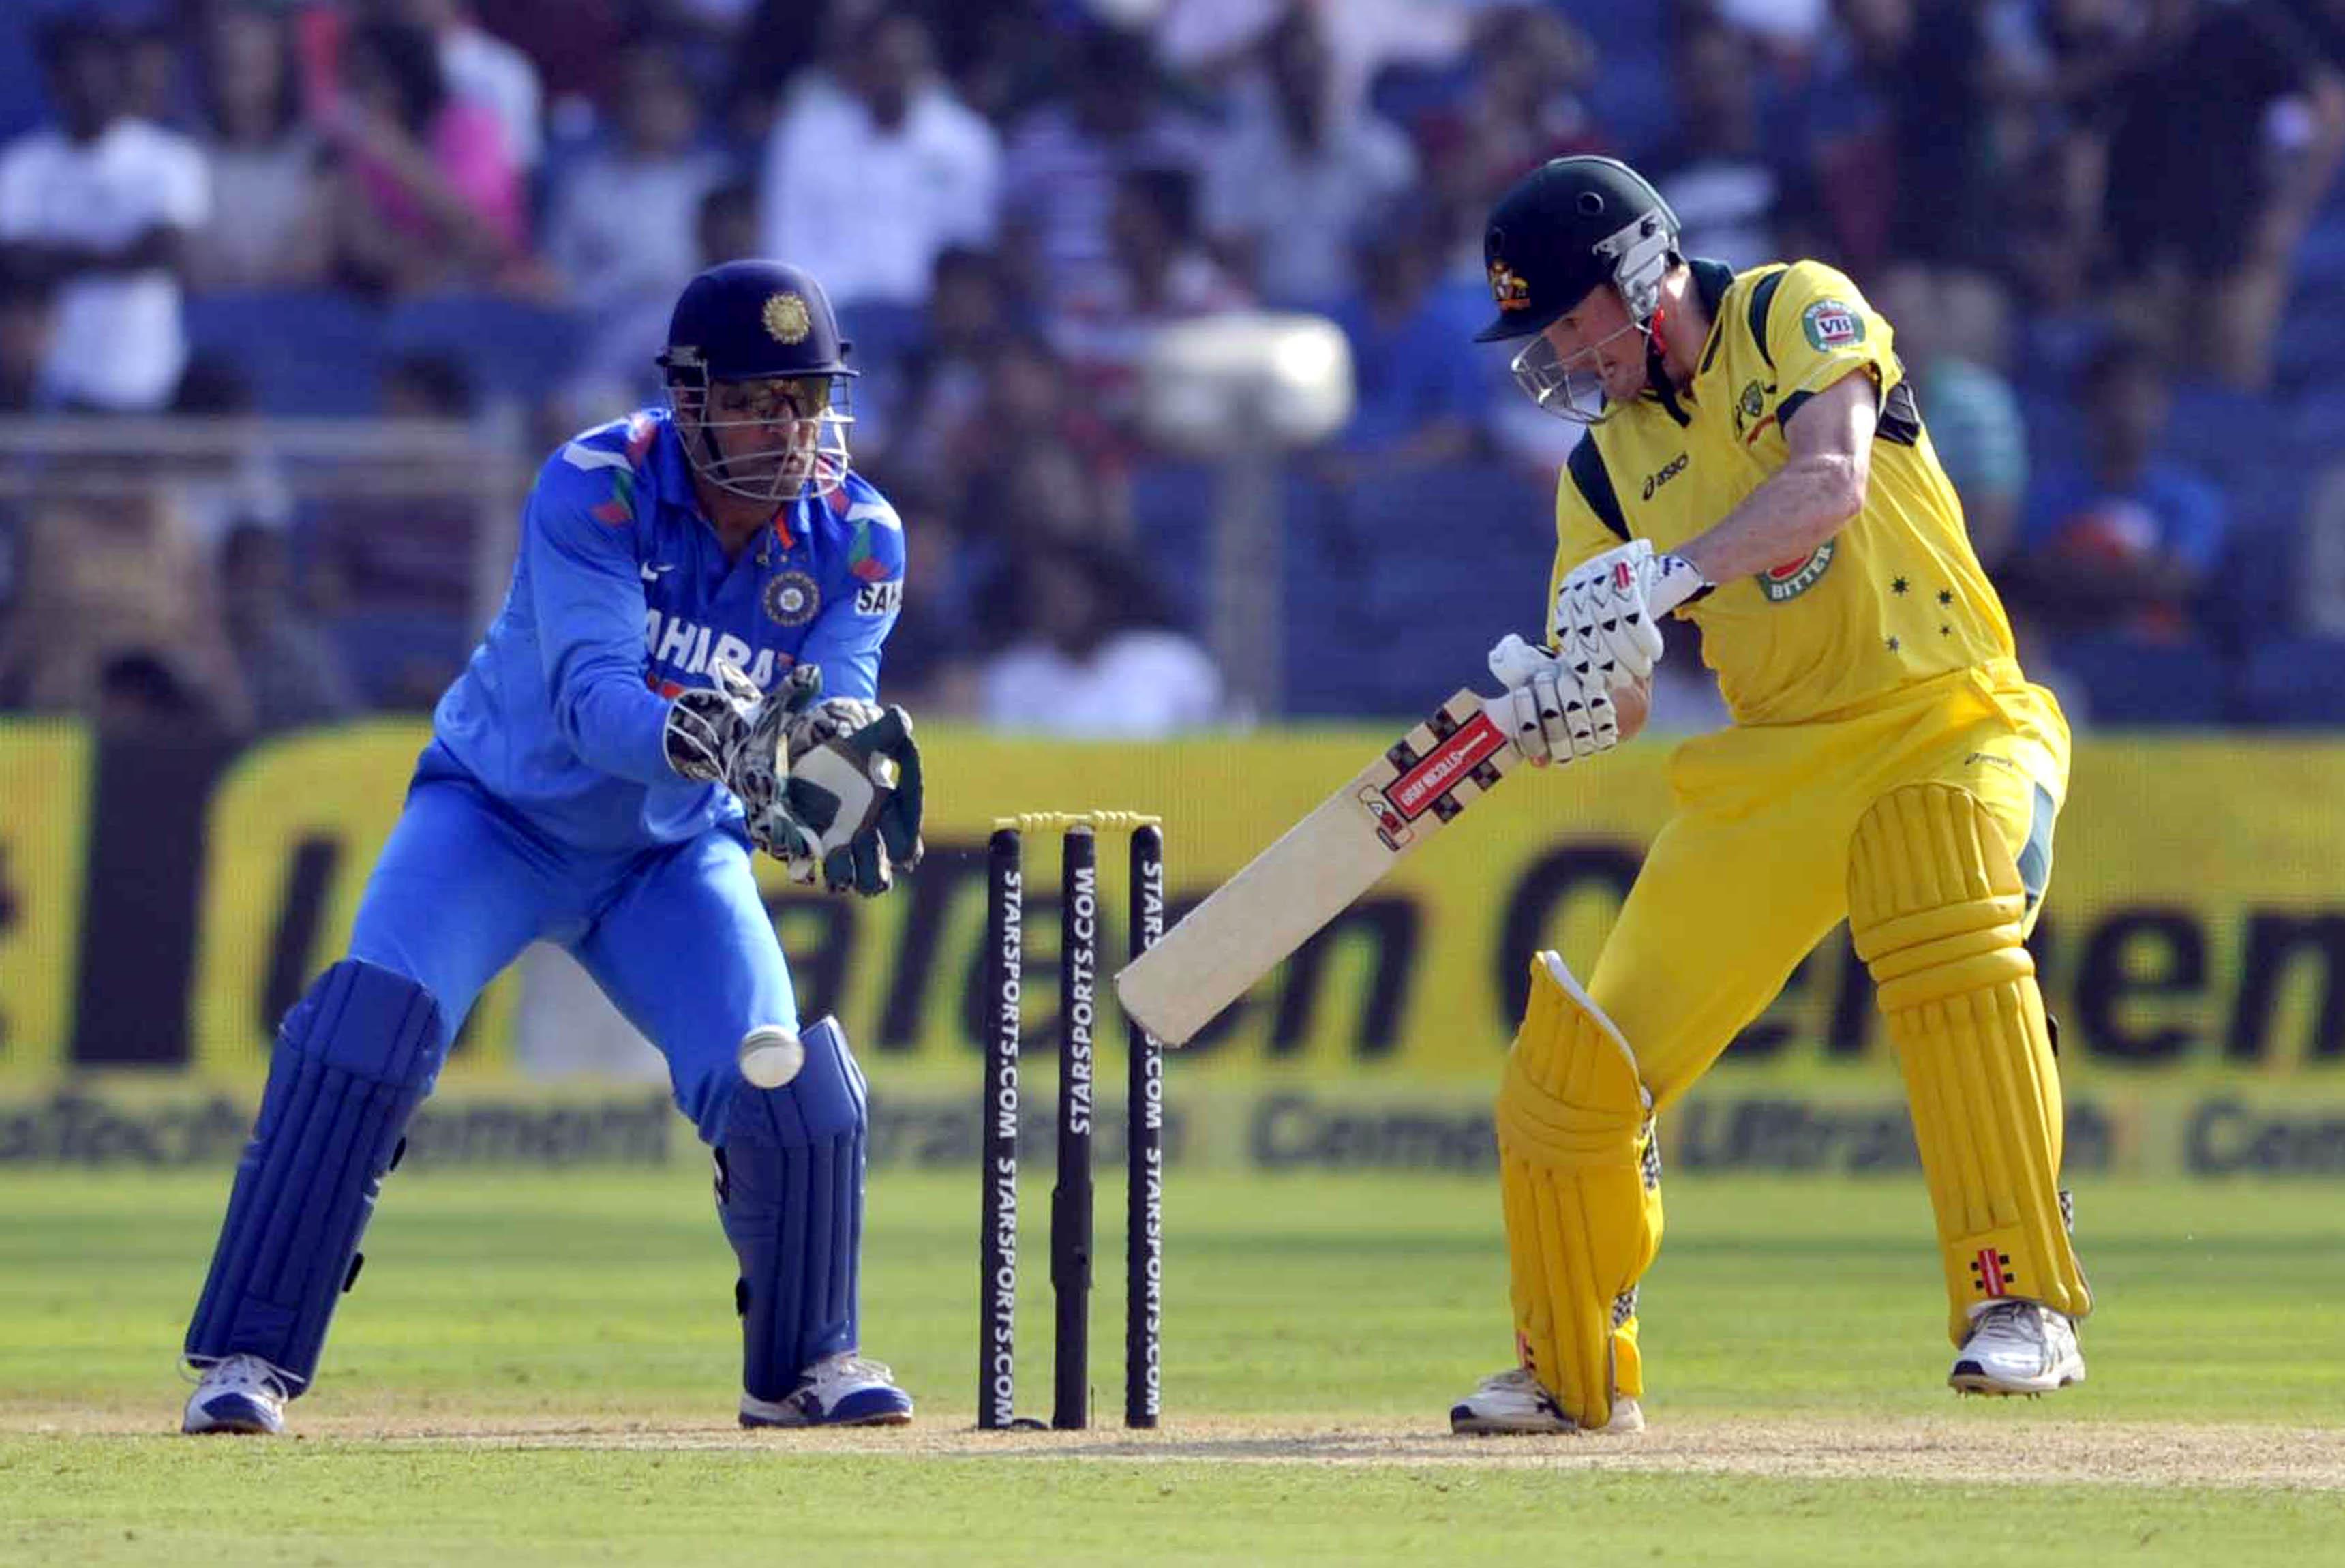 Ind vs Aus 1st ODI : Australia won by 72 runs | Breaking News, World Snap News3440 x 2300